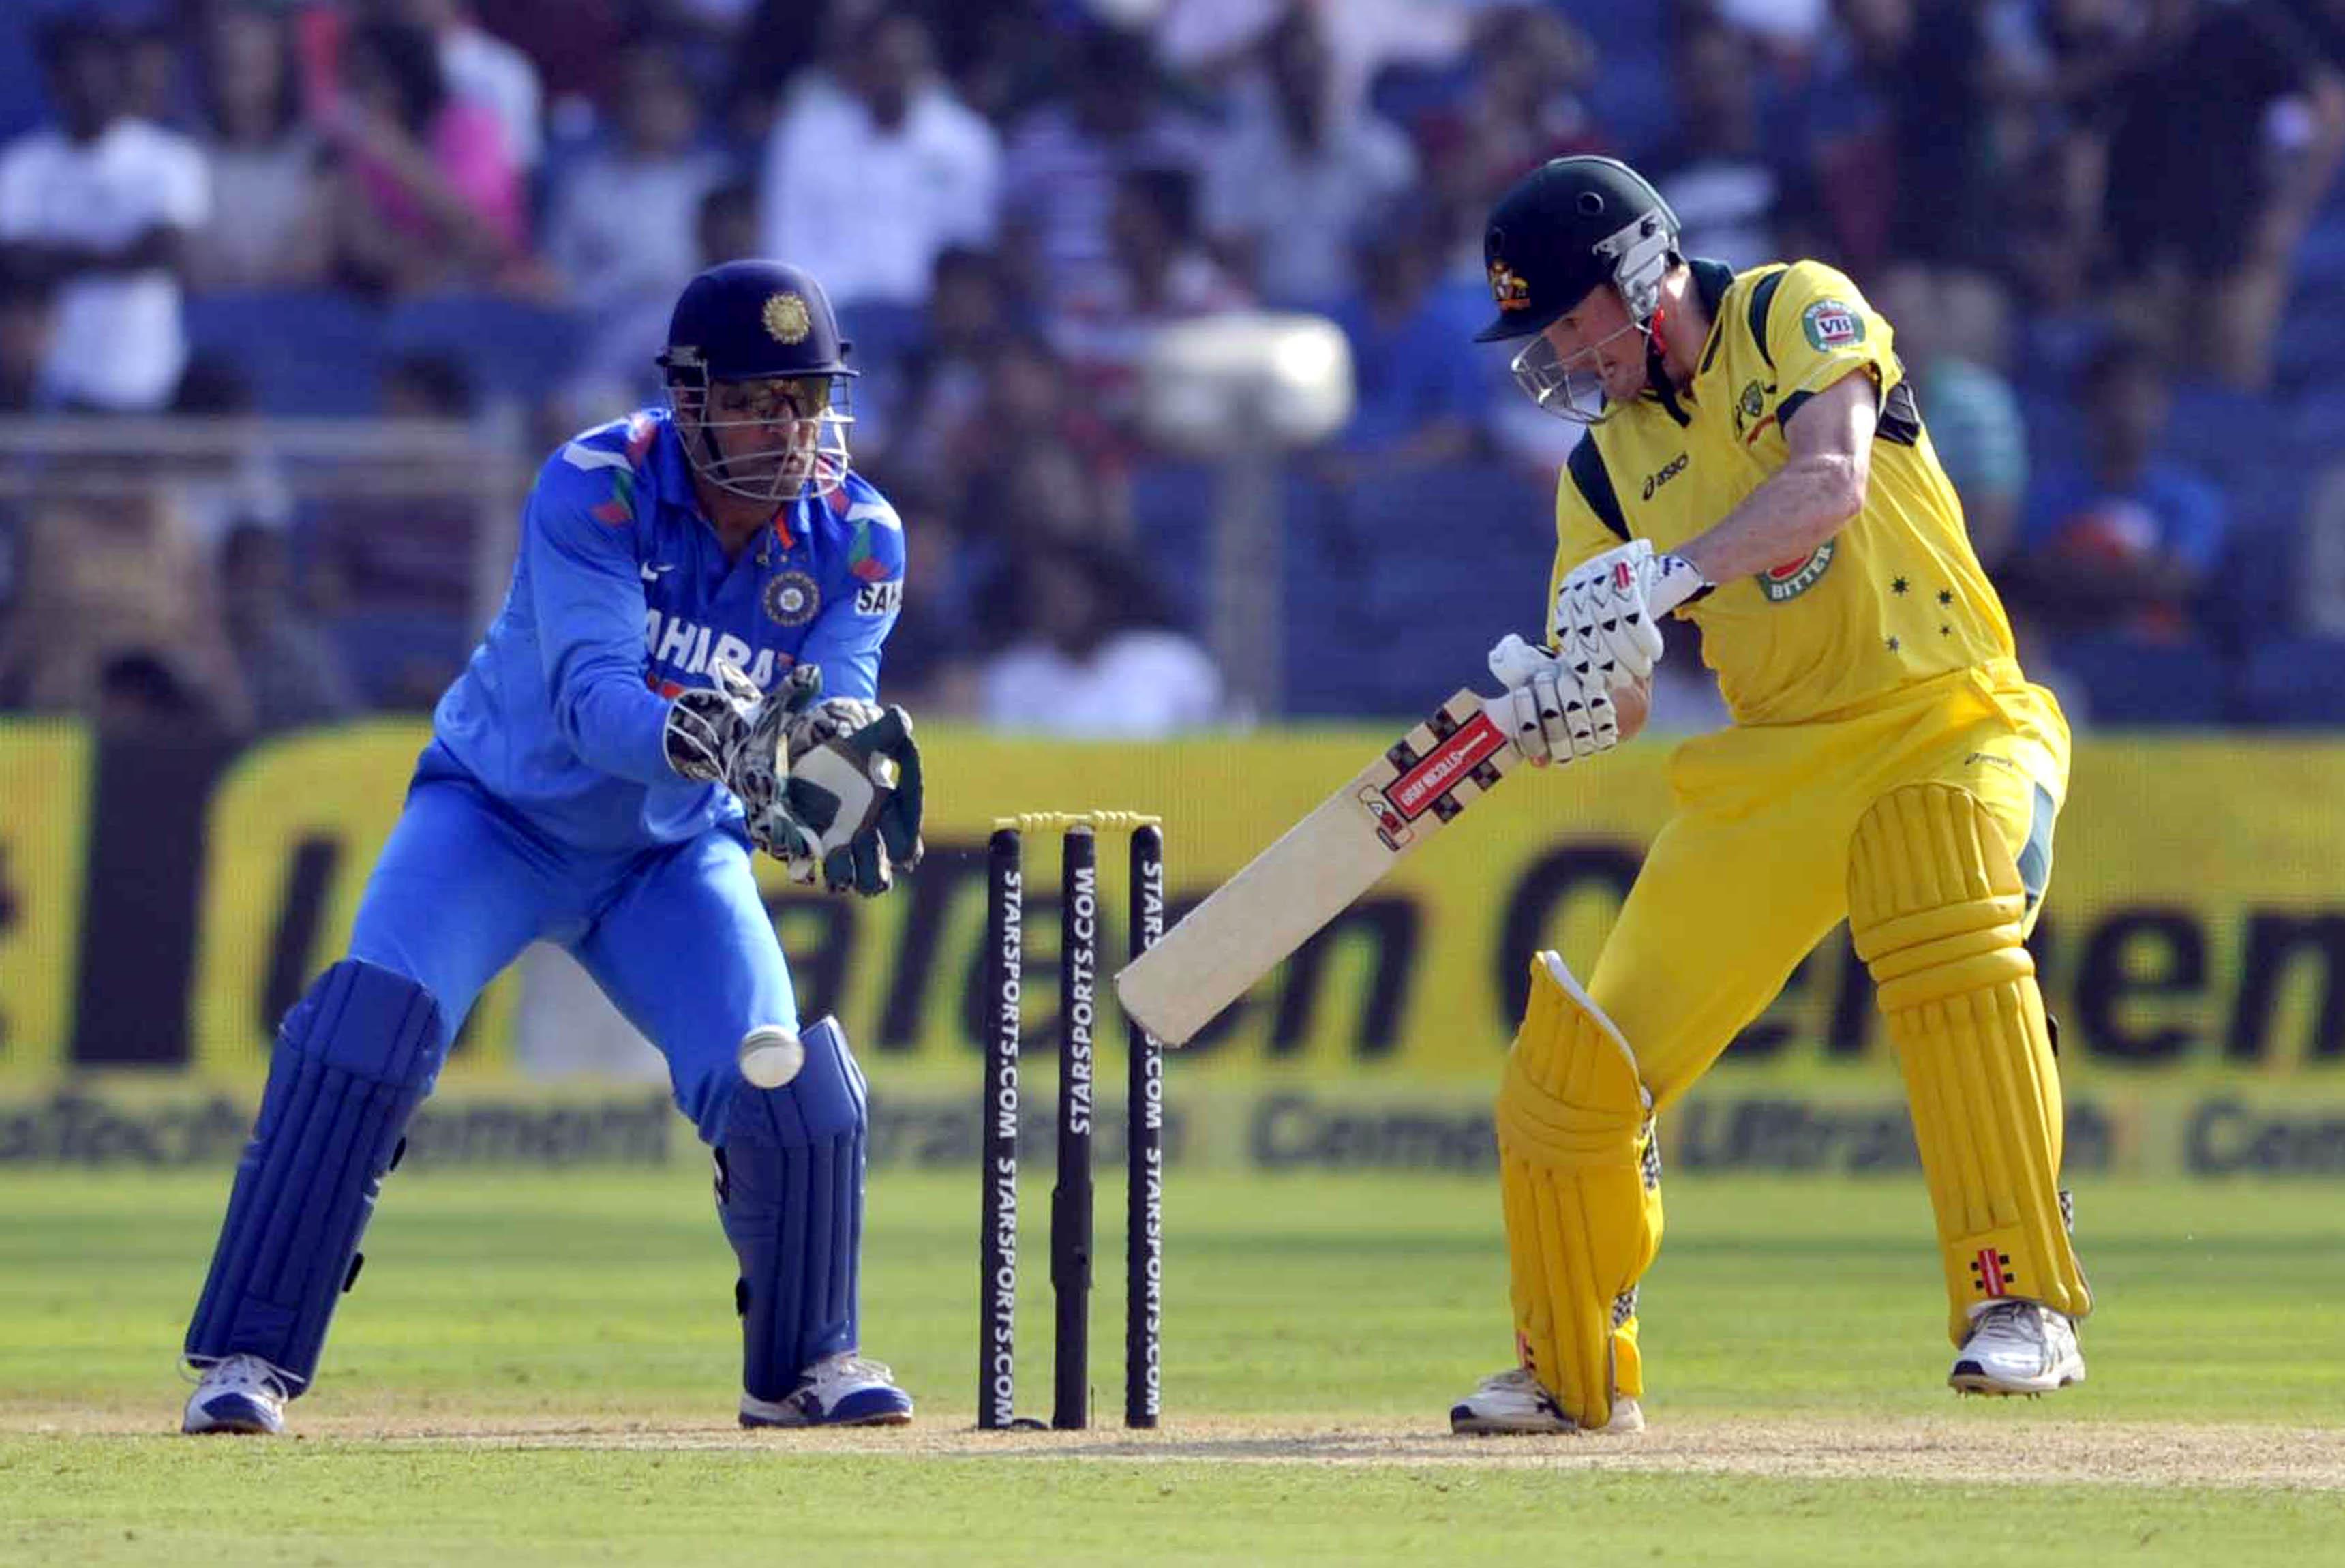 Ind vs Aus 1st ODI : Australia won by 72 runs | Breaking News, World Snap News3440 x 2300